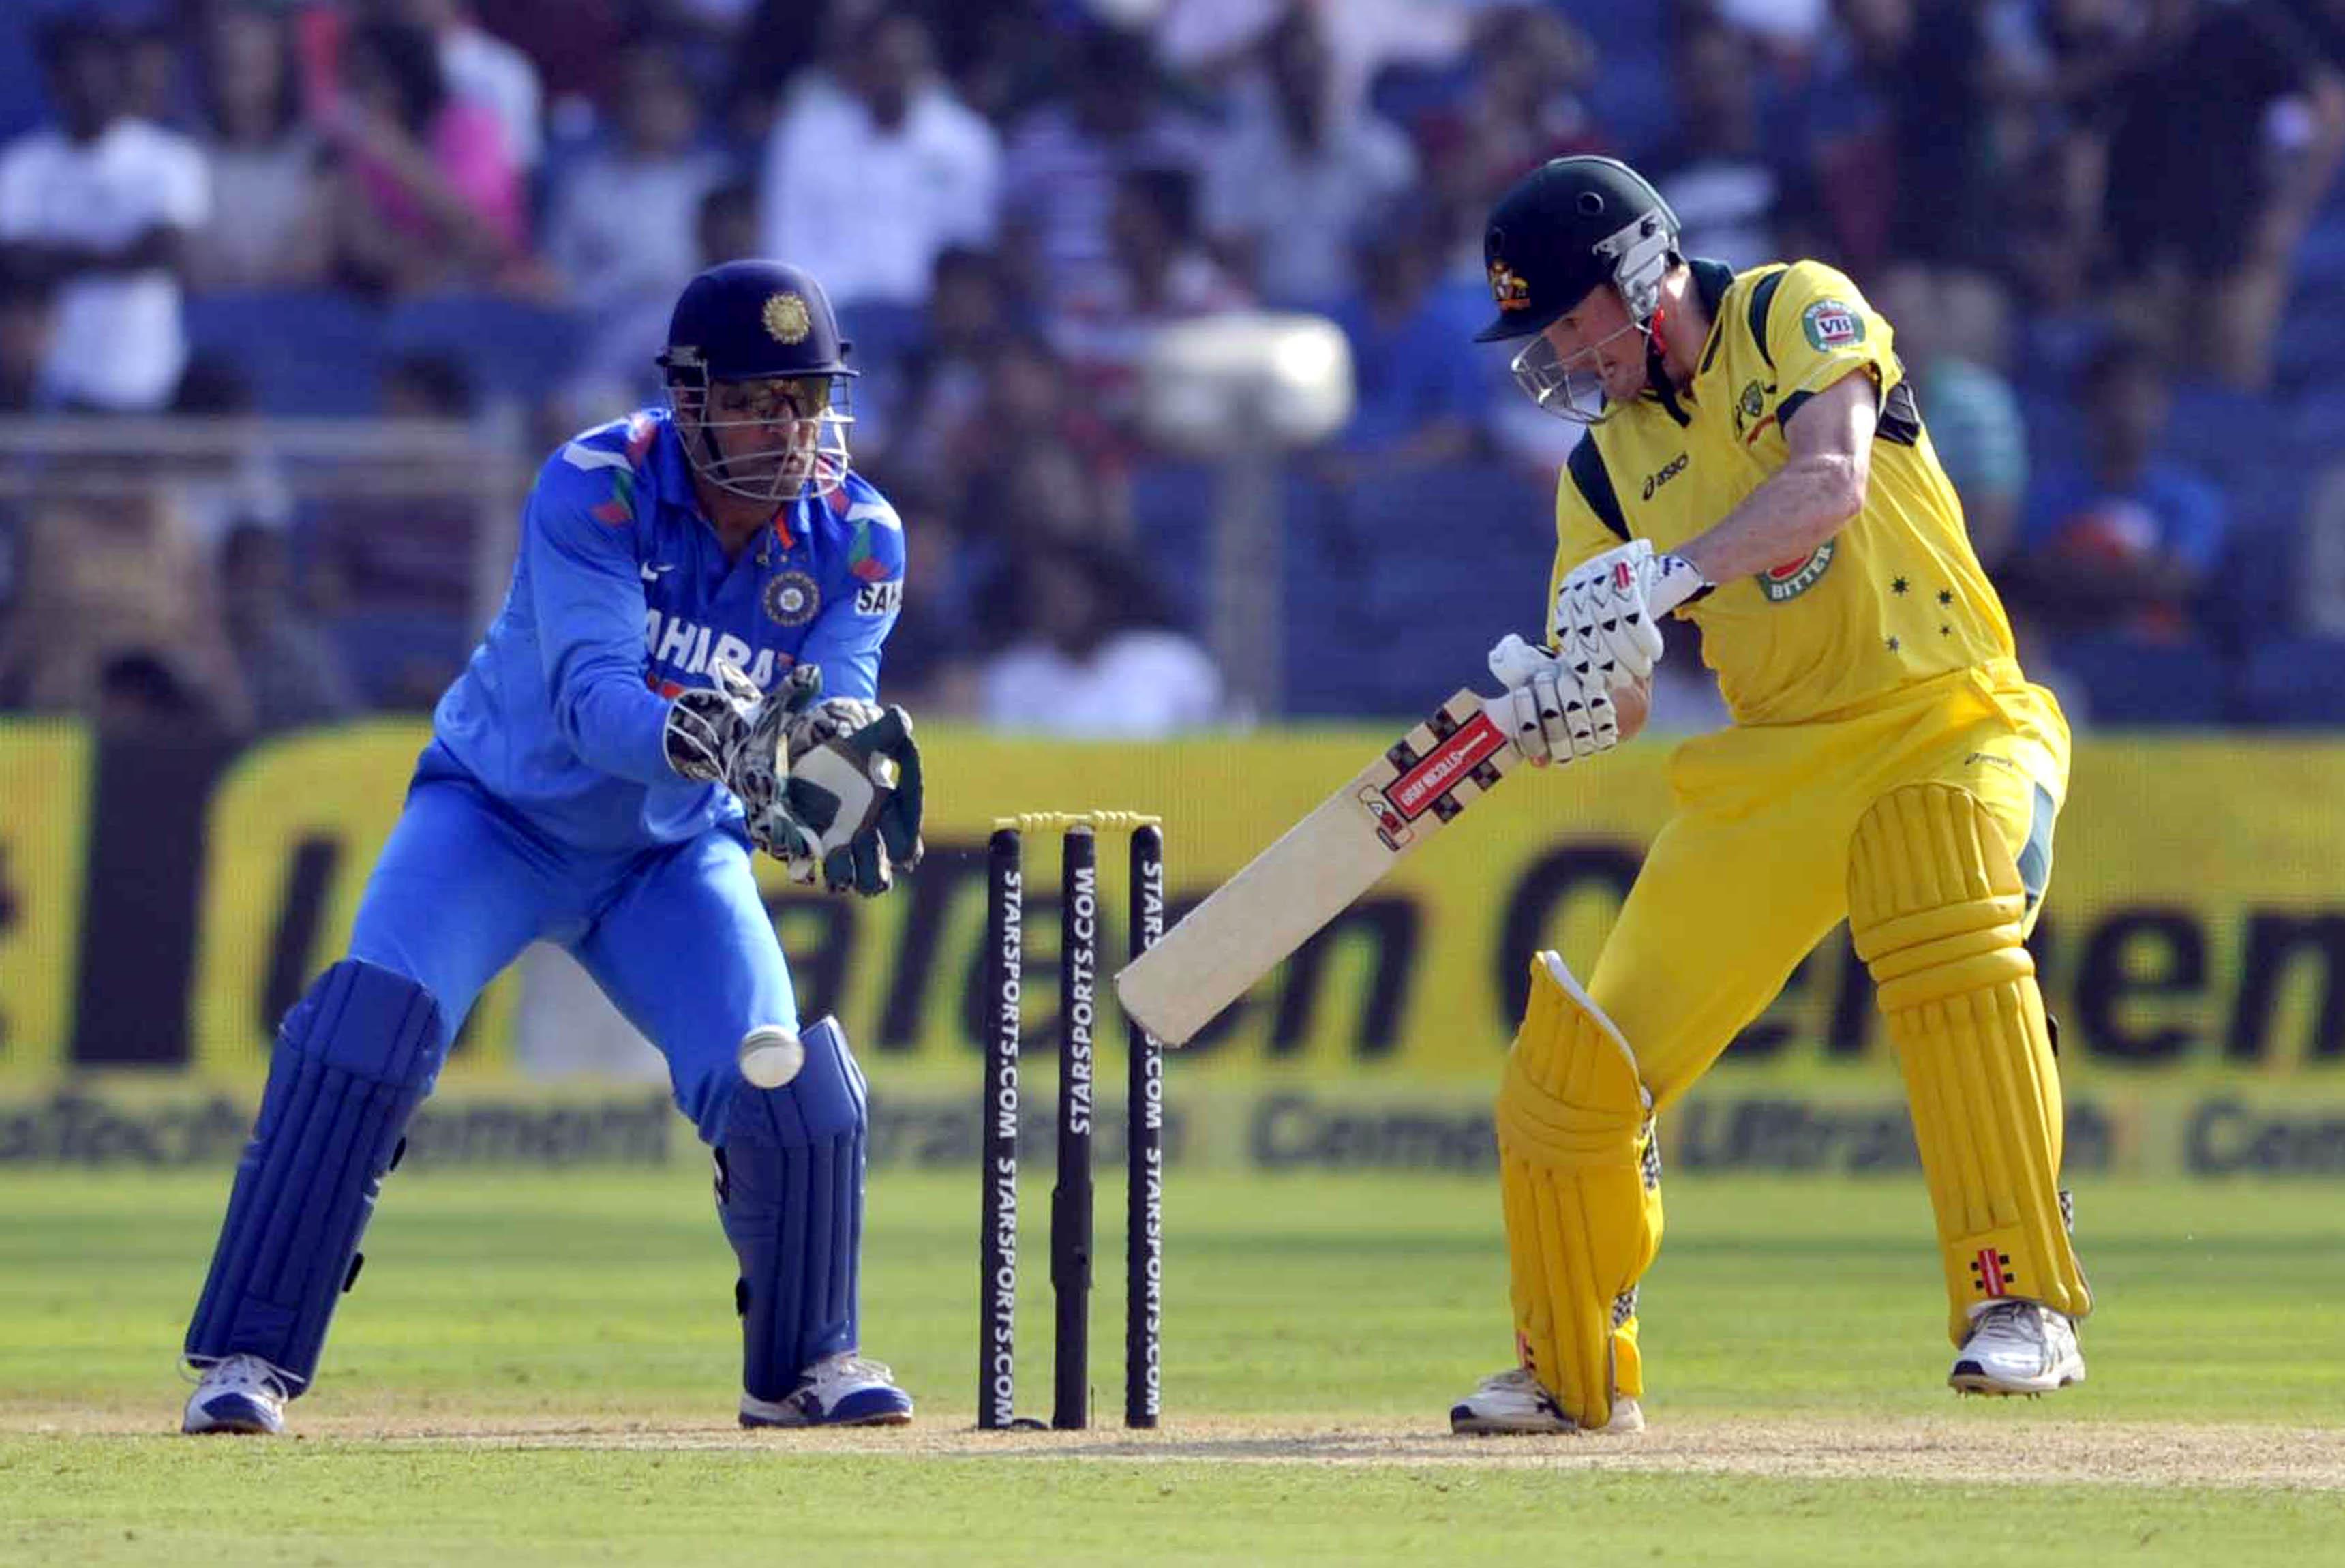 Ind vs Aus 1st ODI : Australia won by 72 runs | Breaking News, World Snap News3440 x 2300